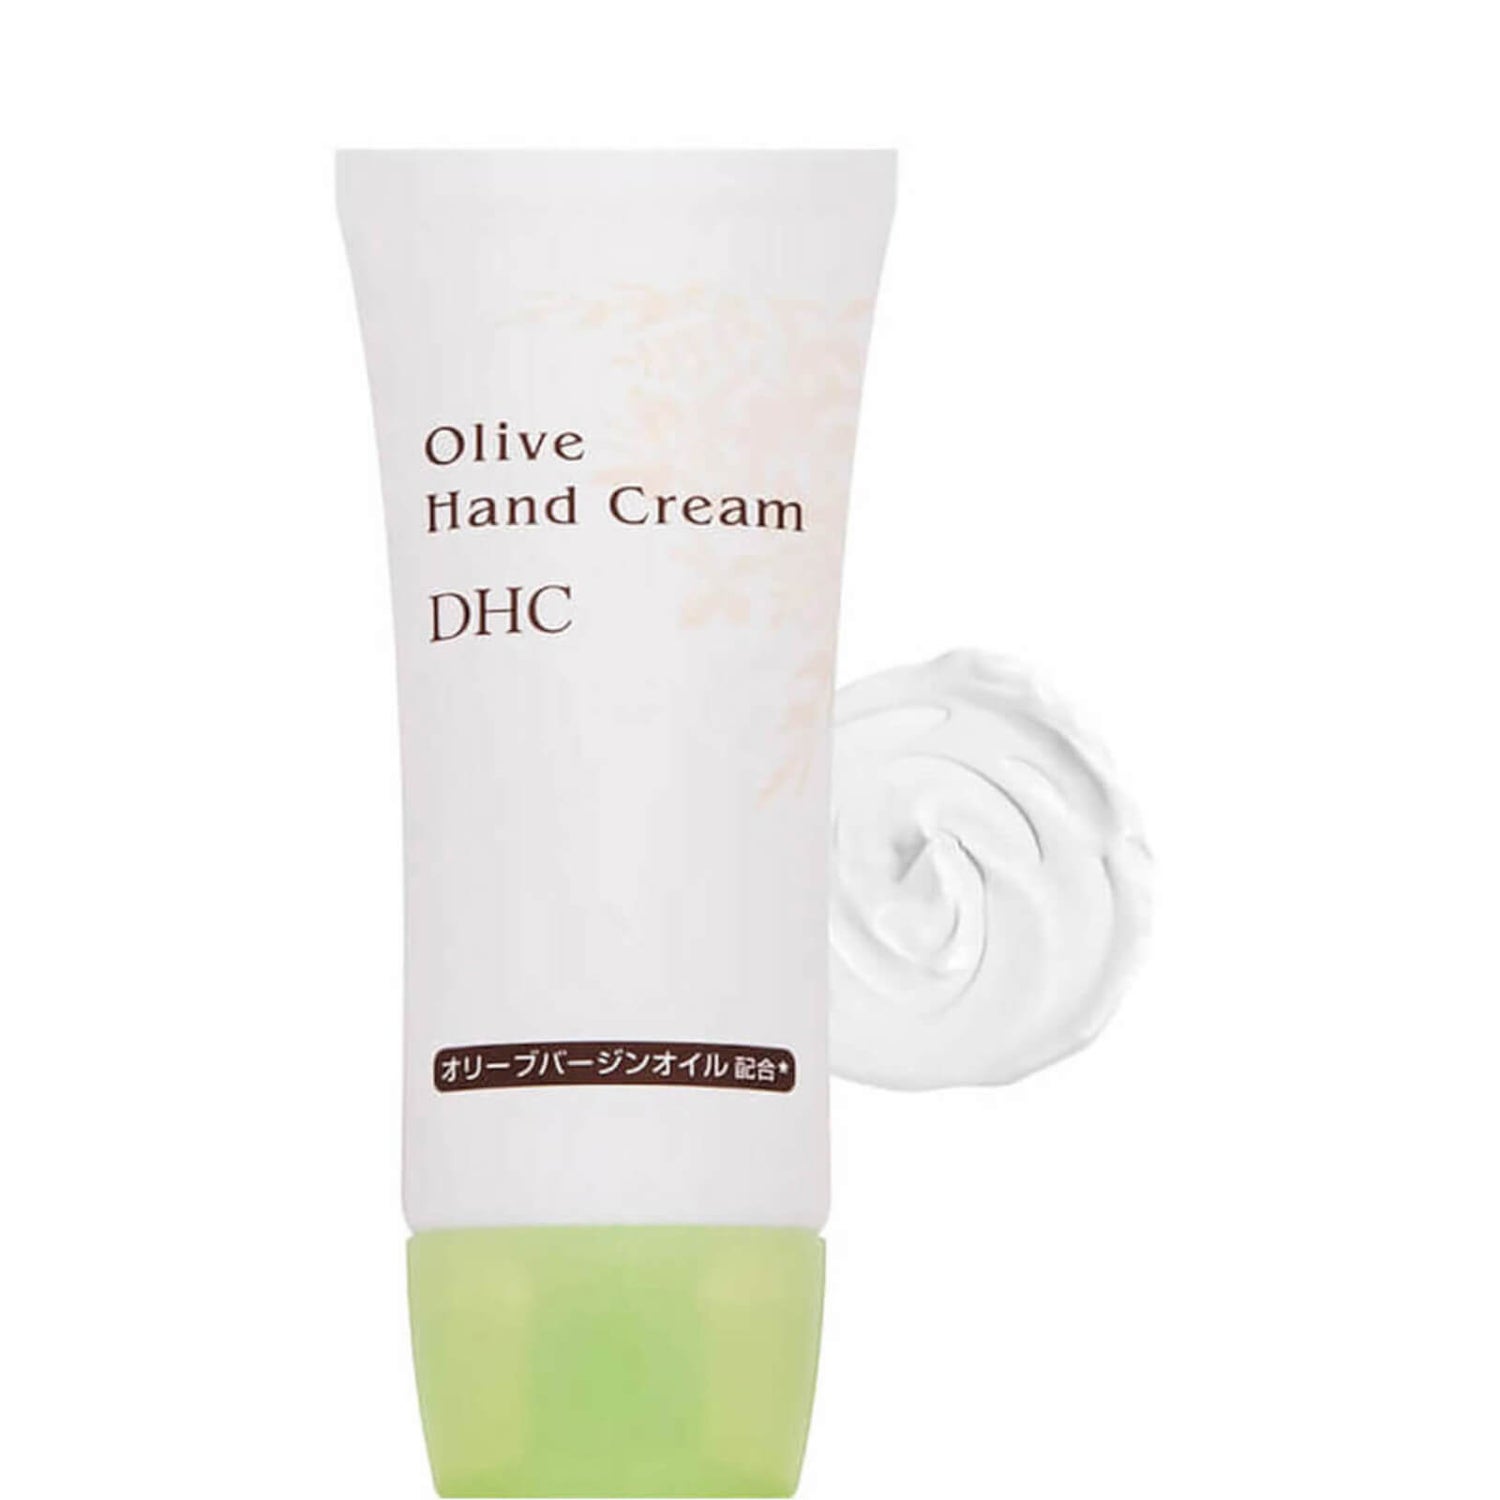 DHC Olive Hand Cream 1.9 oz.